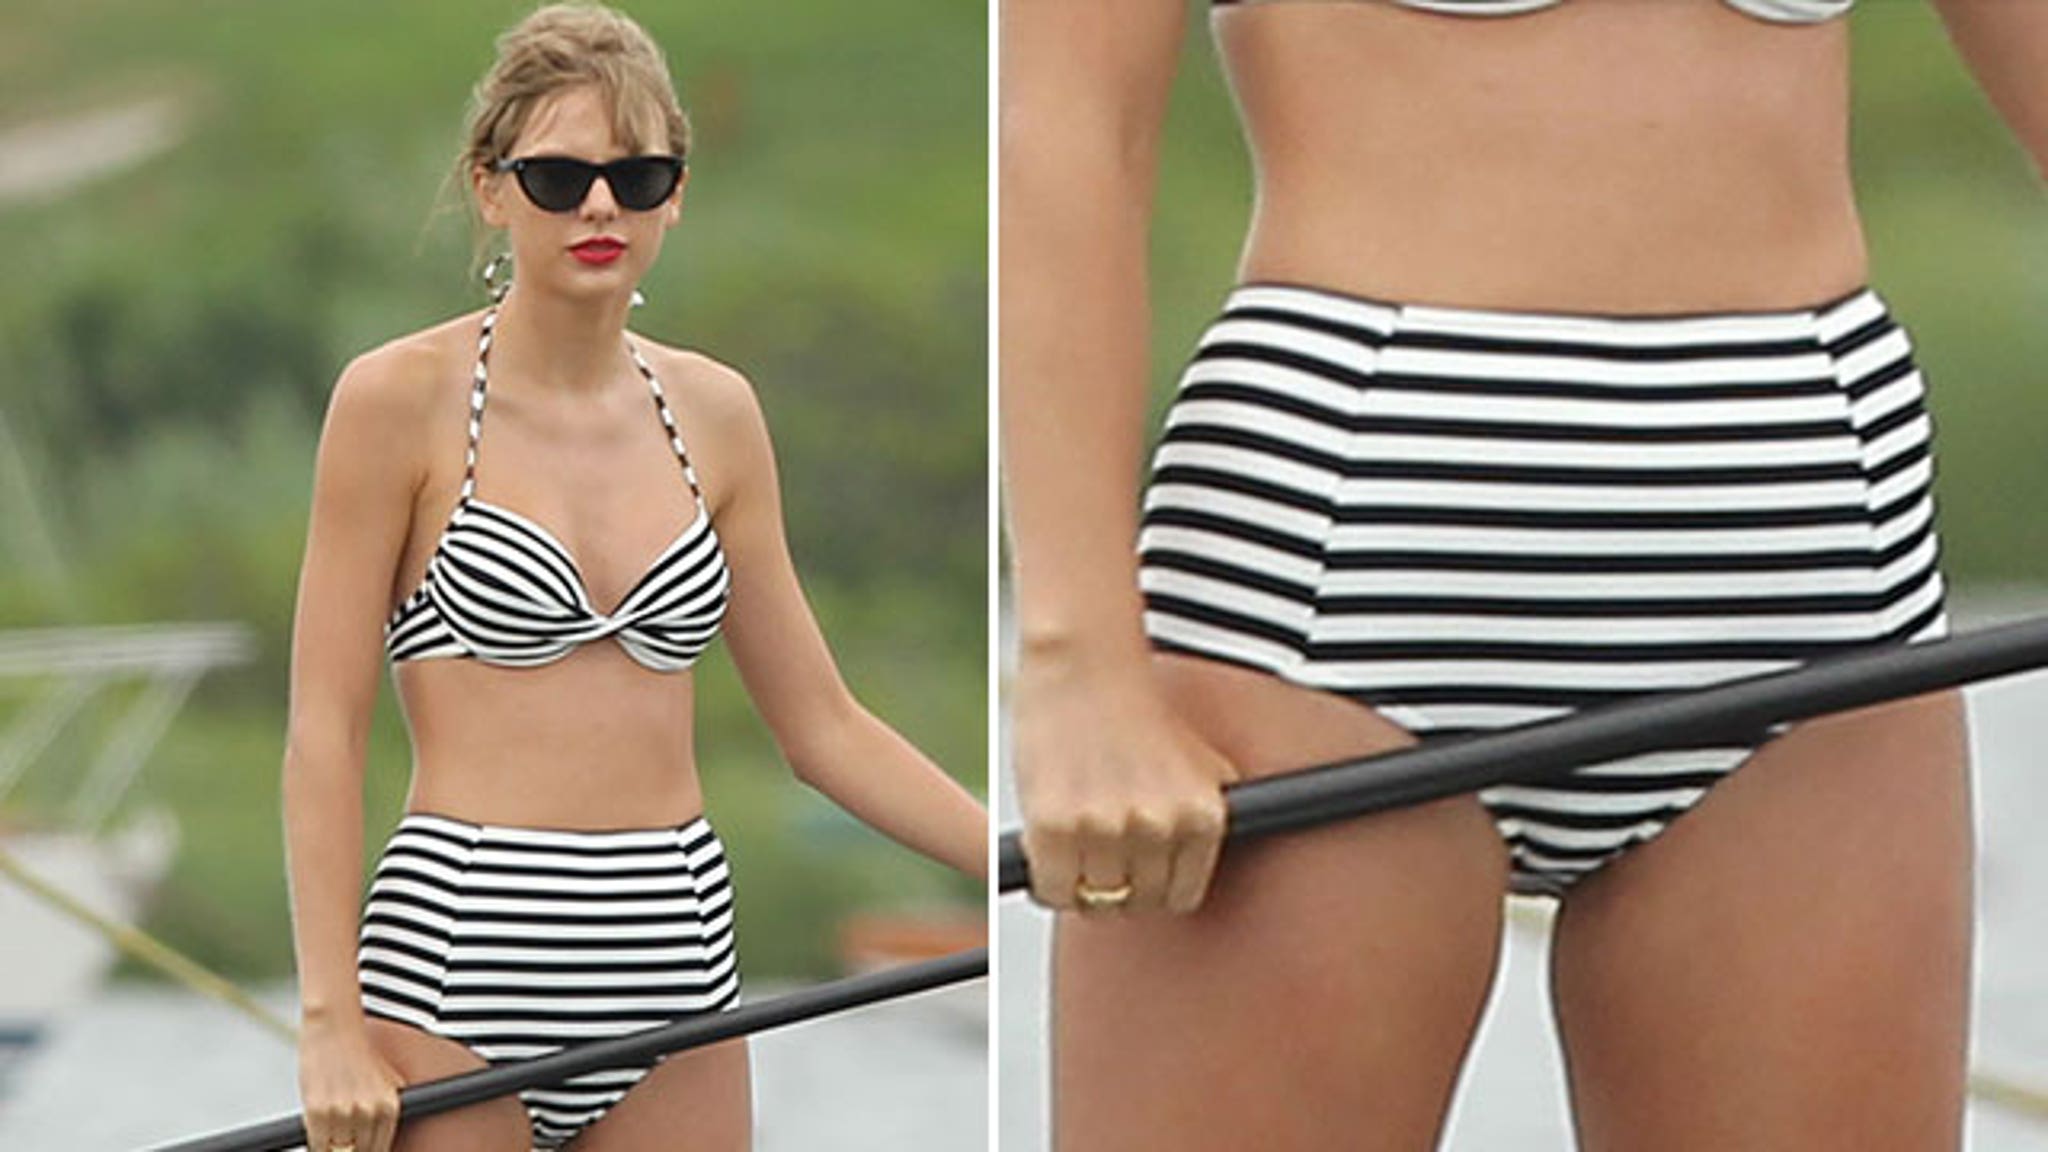 Schepsel Marine Presentator Taylor Swift's Bikini Looks Like ... Granny Panties?!